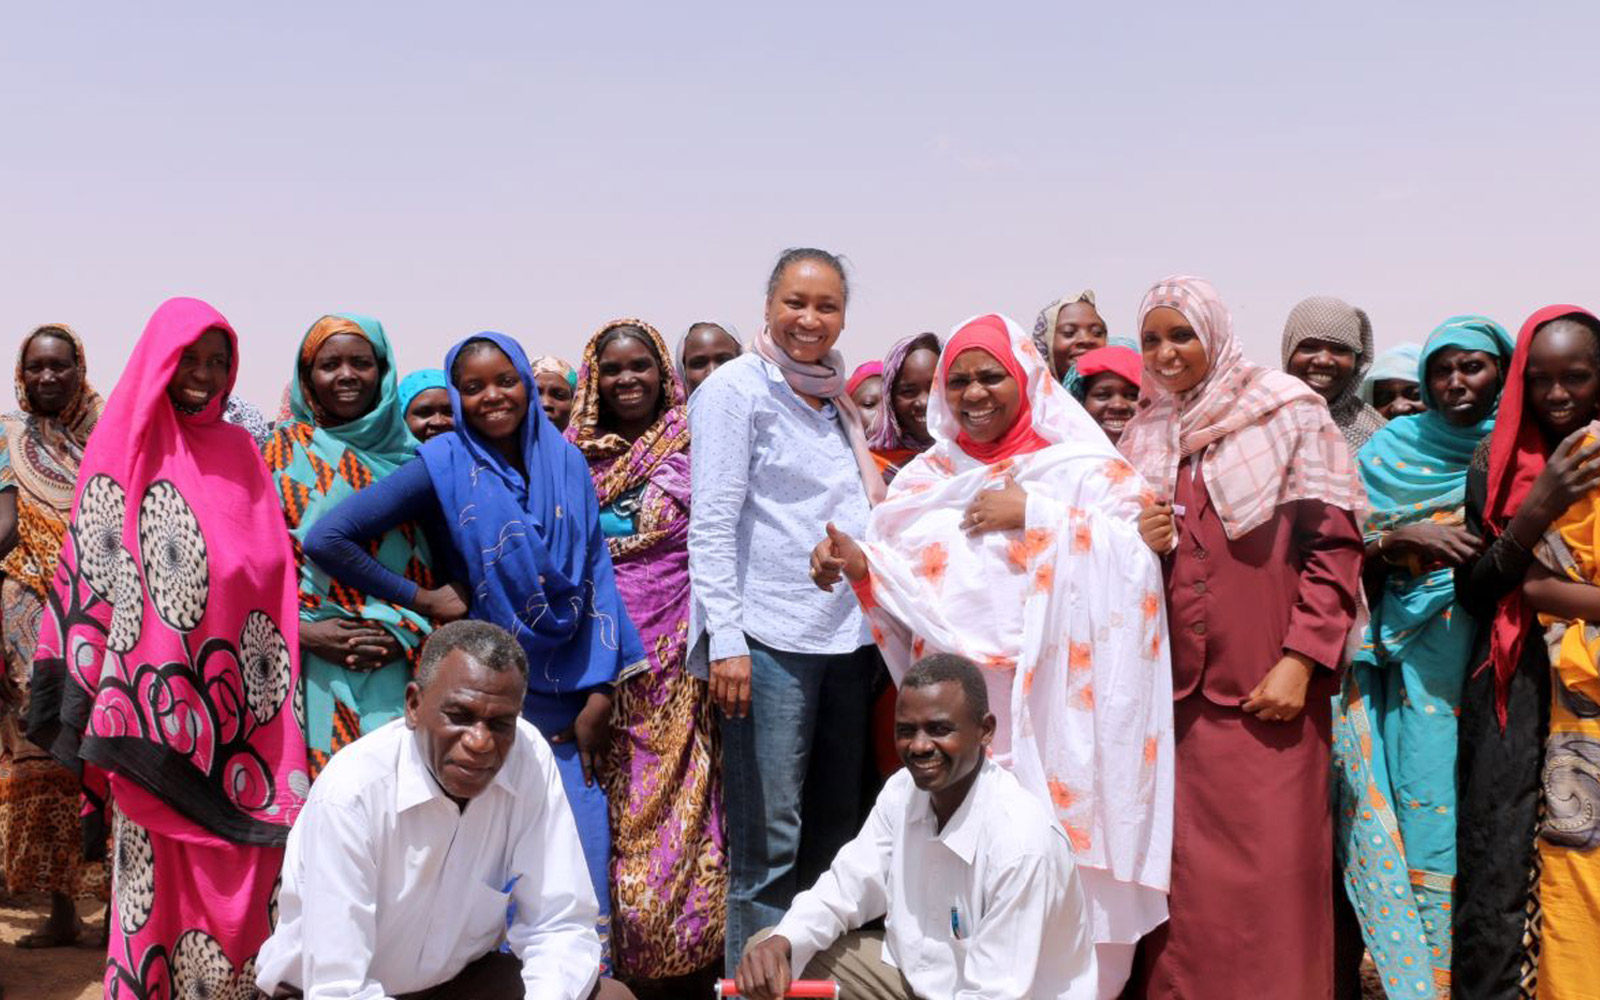 Muna Eltahir <br/>Practical Action <br/> Country Director Sudan